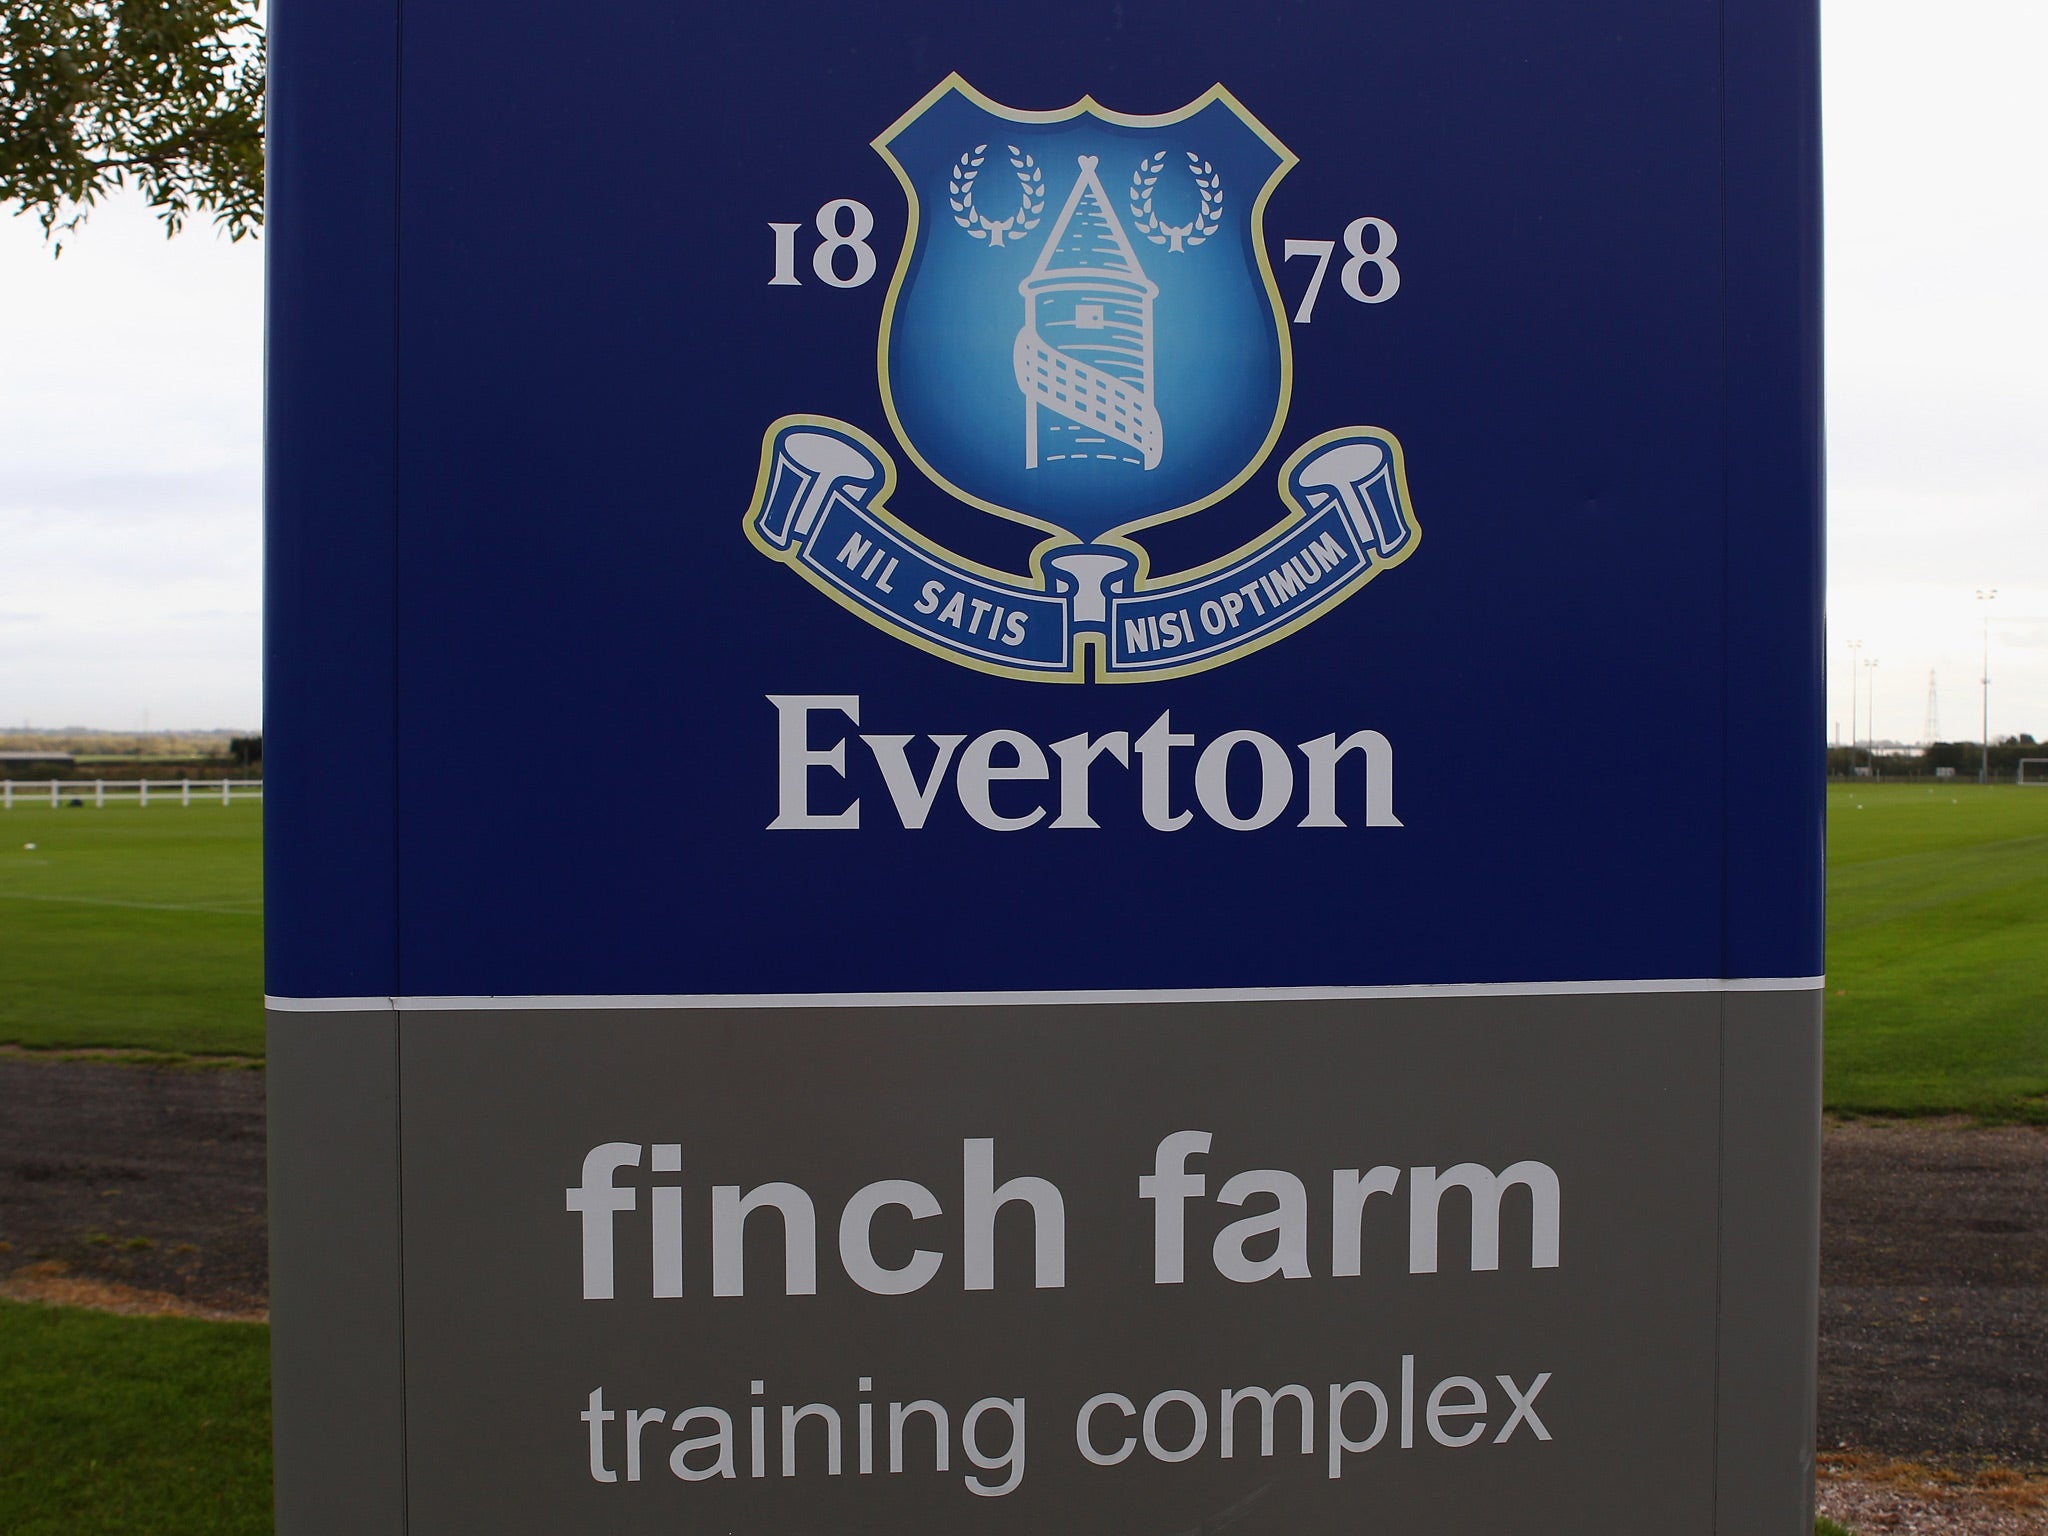 Finch Farm, Everton's training ground